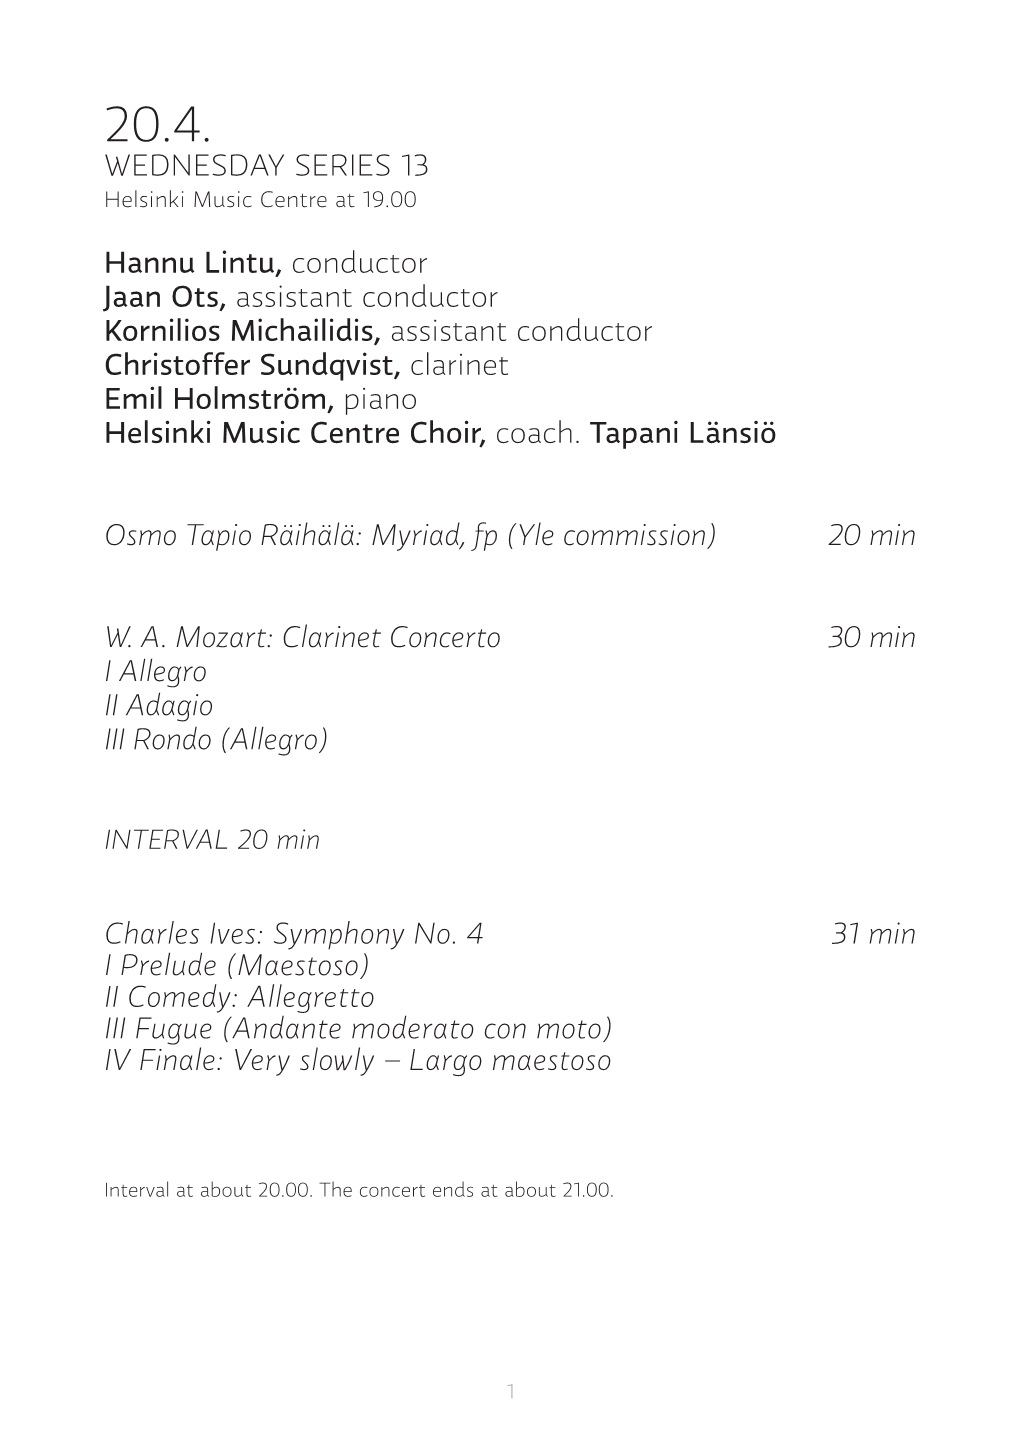 WEDNESDAY SERIES 13 Hannu Lintu, Conductor Jaan Ots